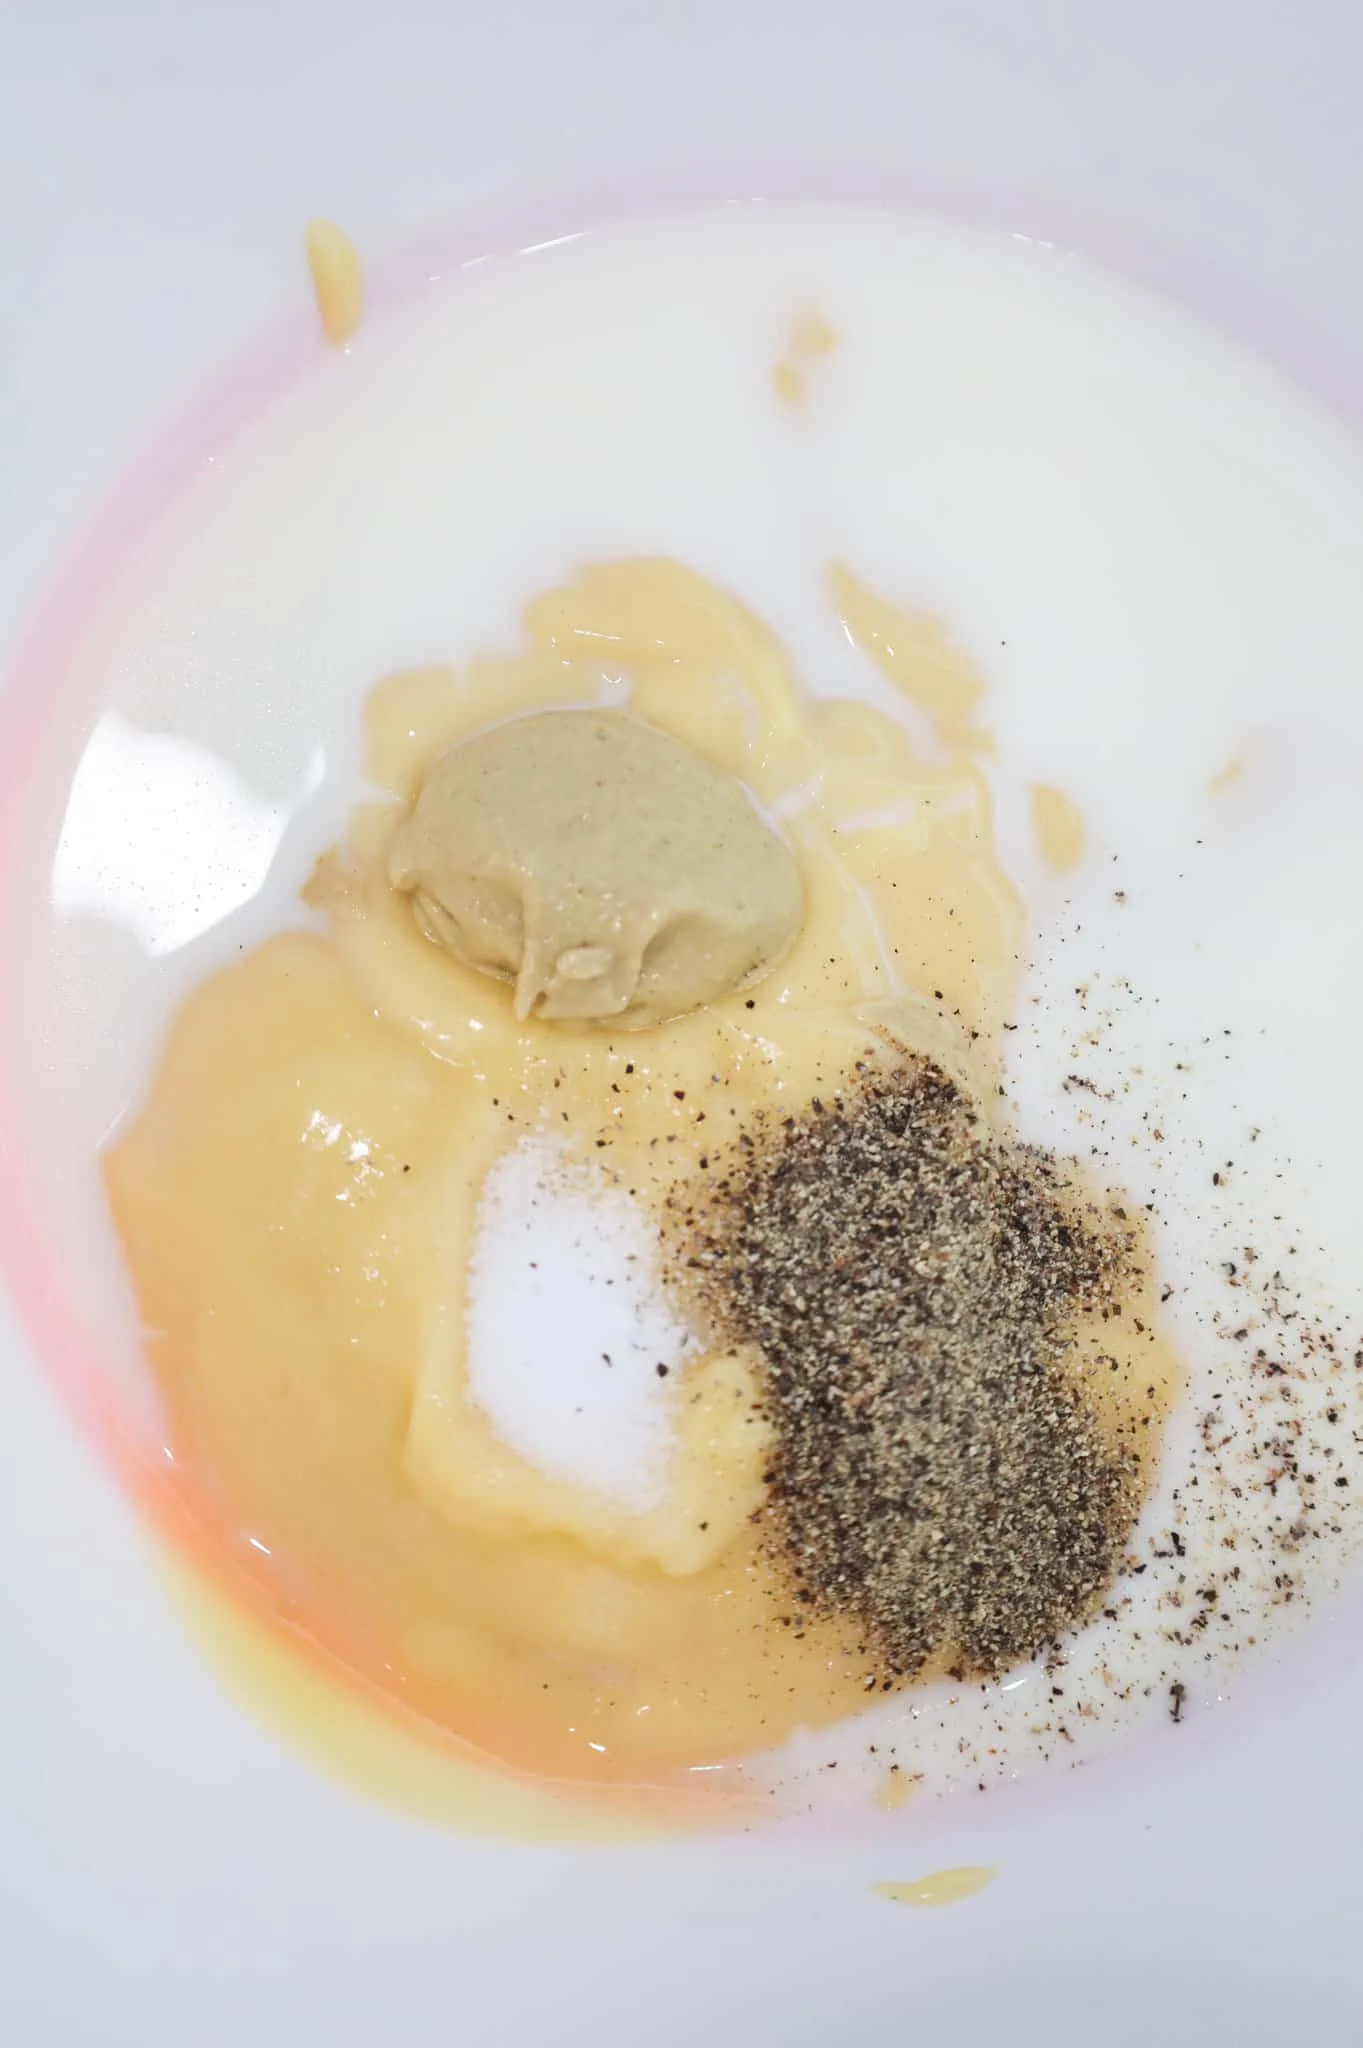 salt, pepper, Dijon mustard, milk and cream of chicken soup in a mixing bowl